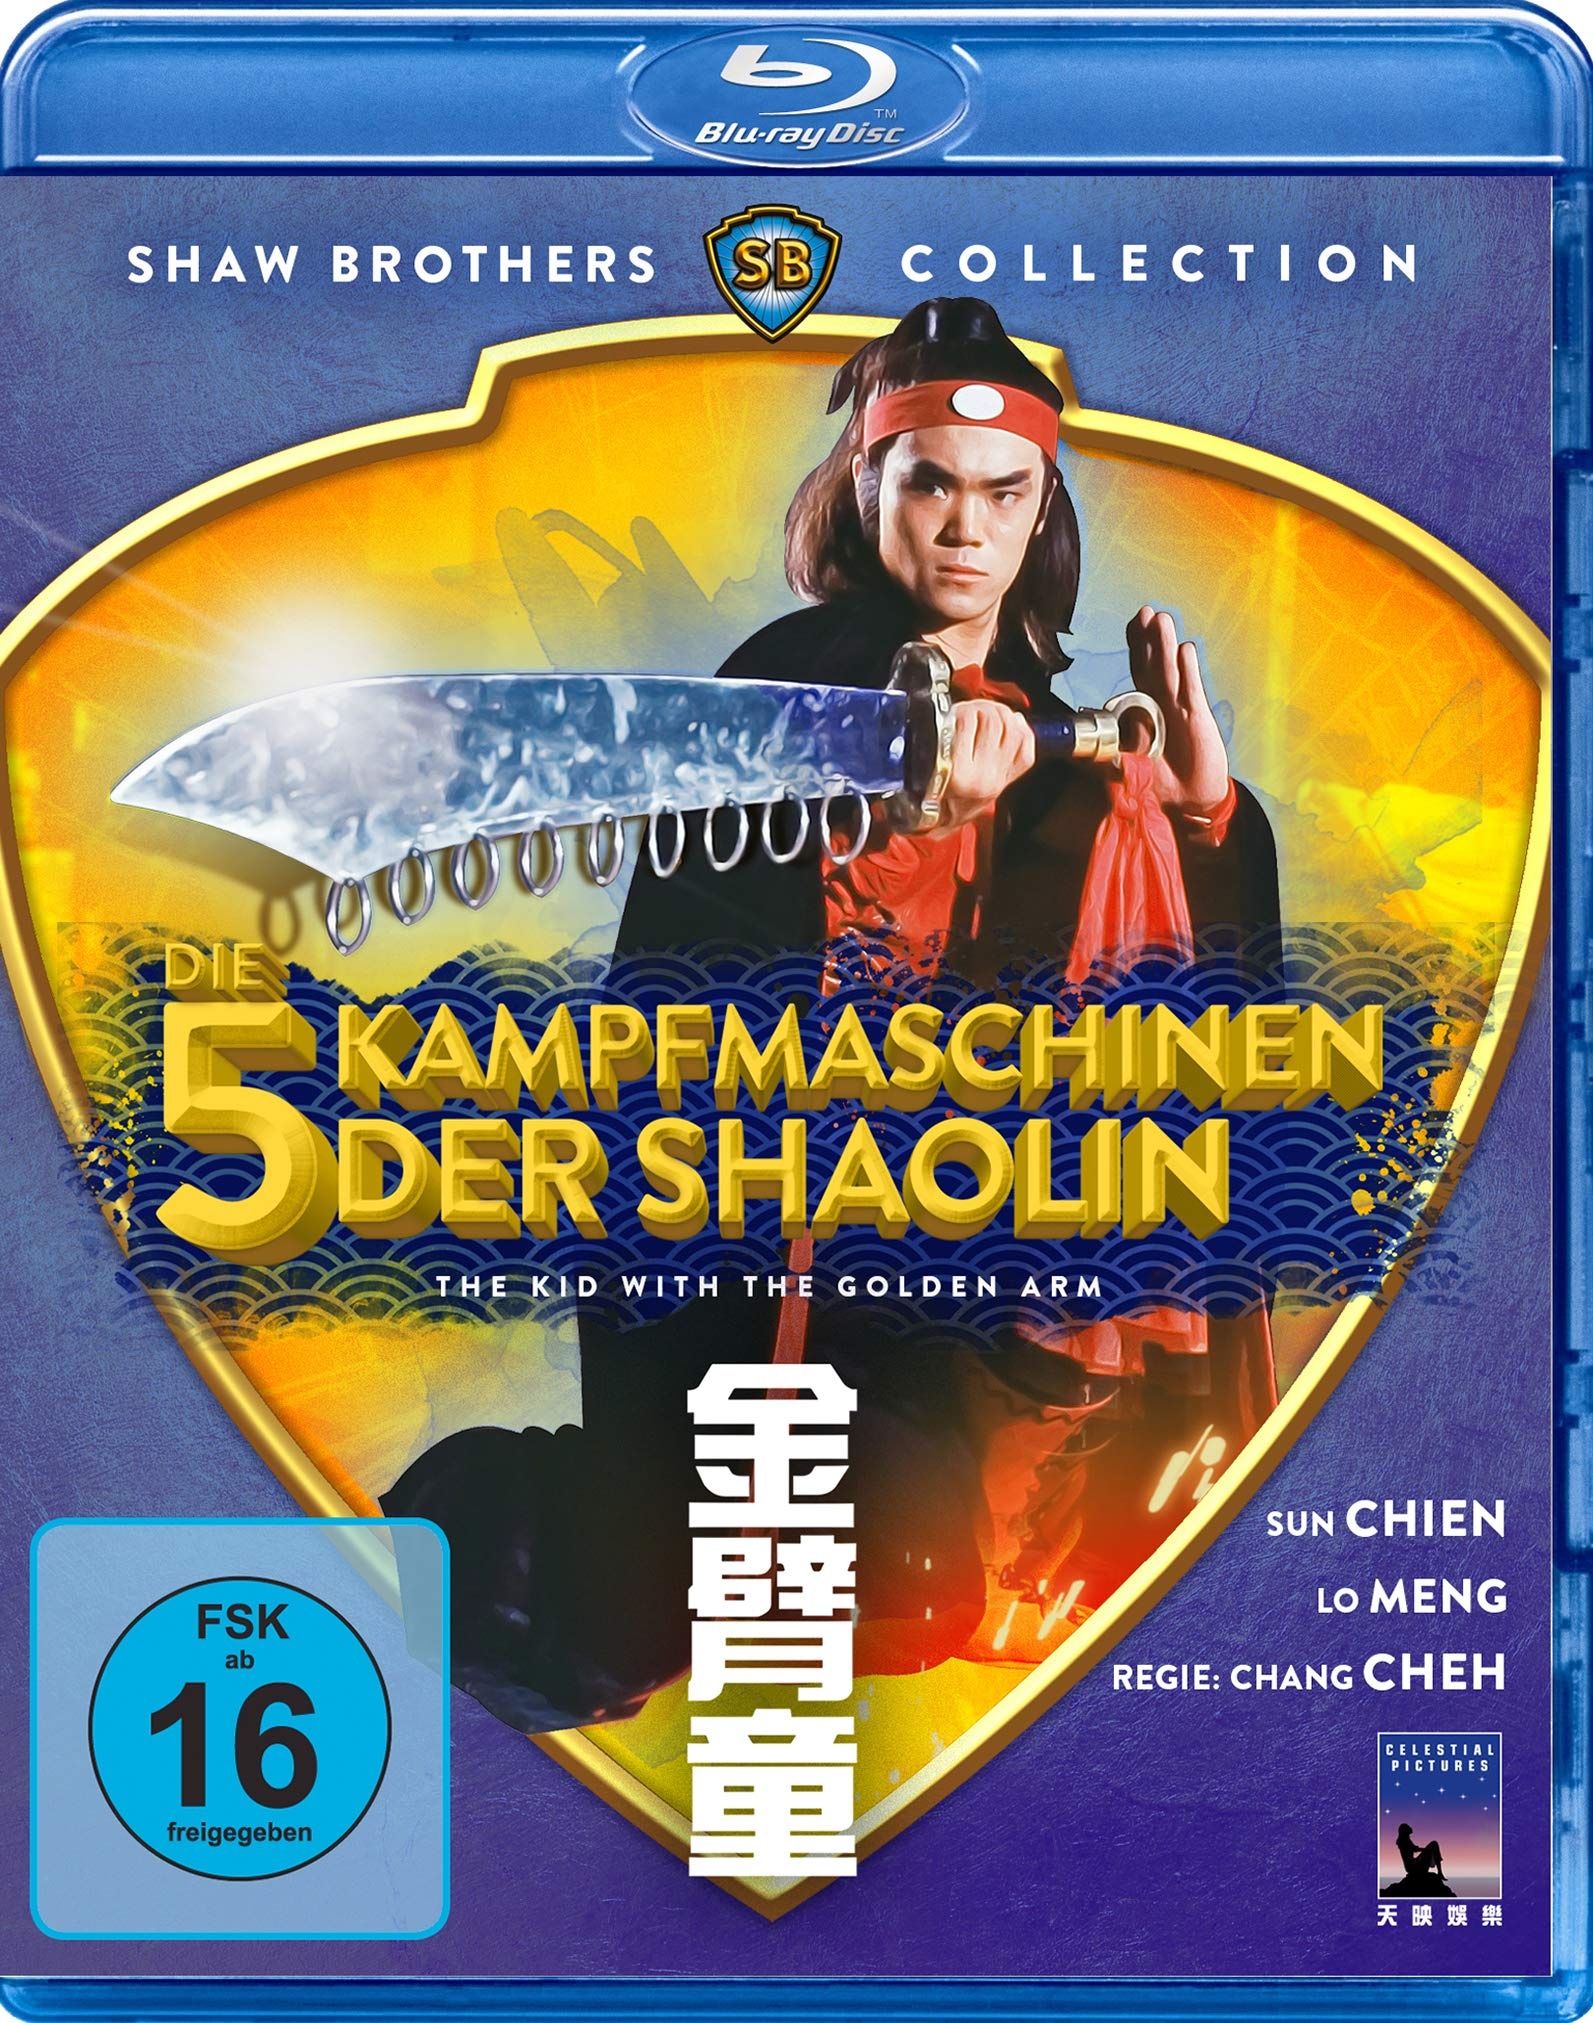 Die 5 Kampfmaschinen der Shaolin (Shaw Brothers Collection) (Blu-ray)